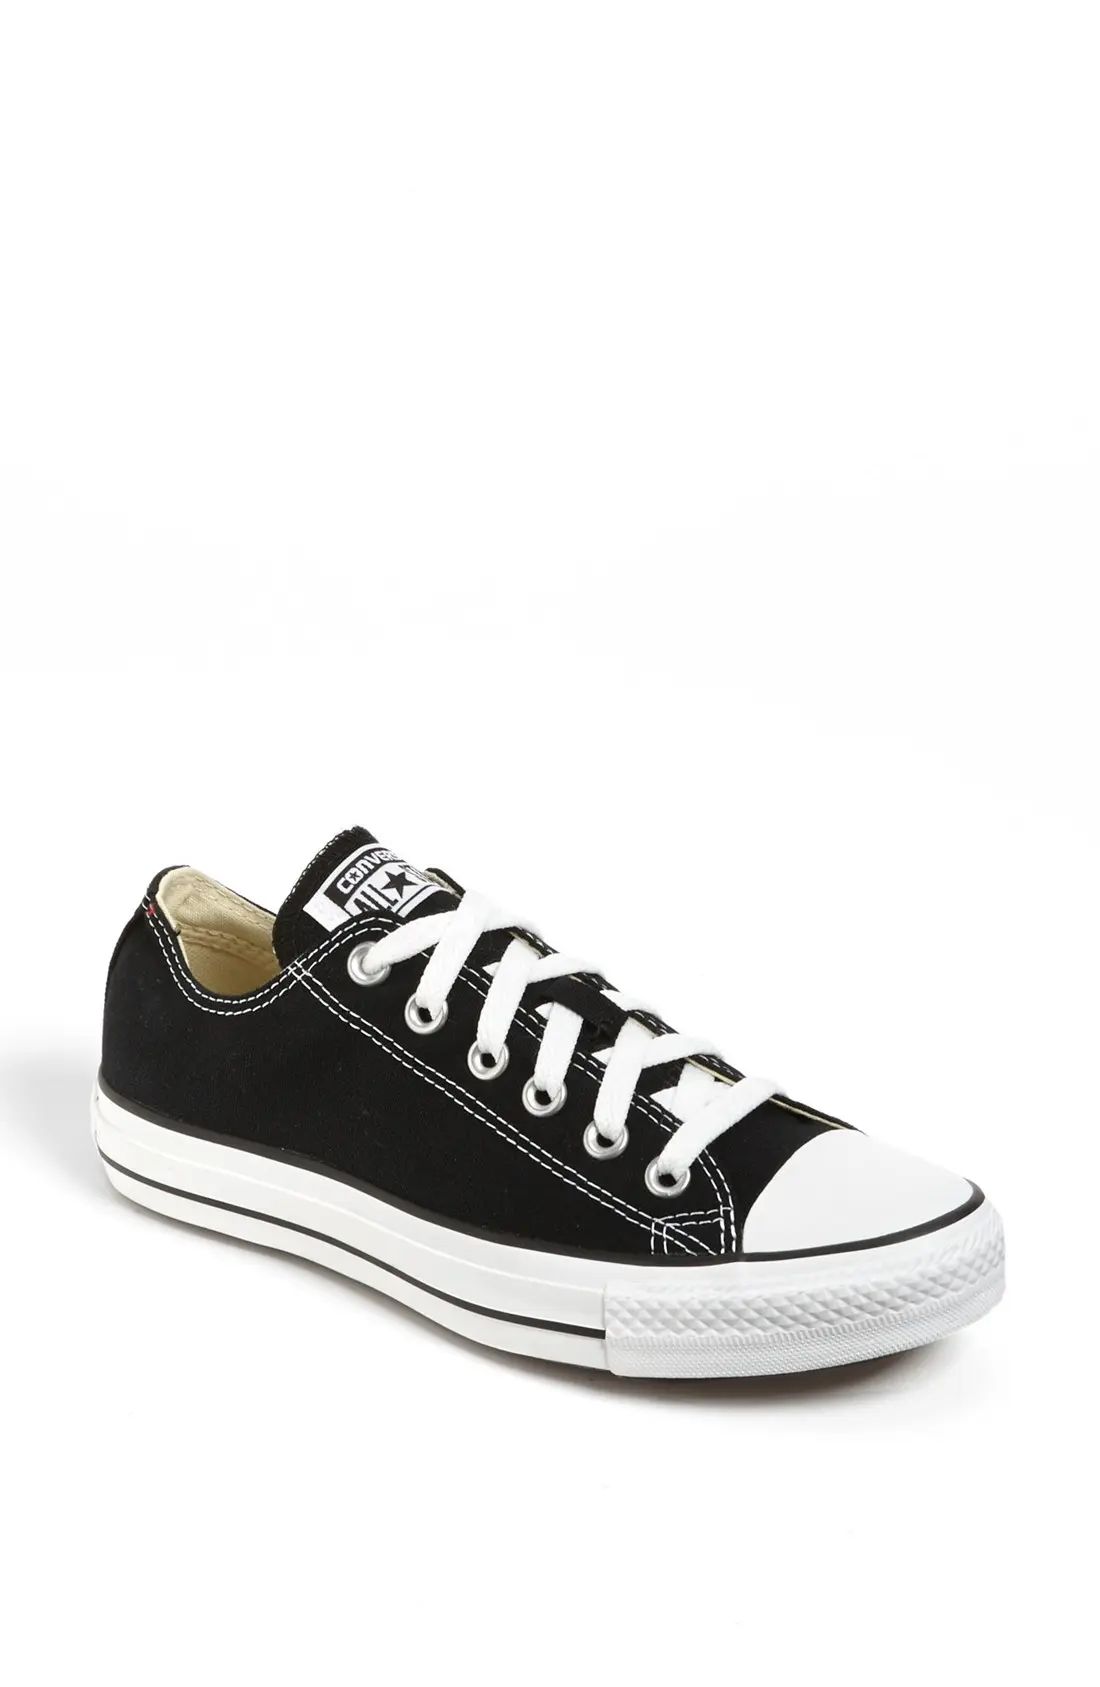 Women's Converse Chuck Taylor Low Top Sneaker, Size 7.5 M - Black | Nordstrom